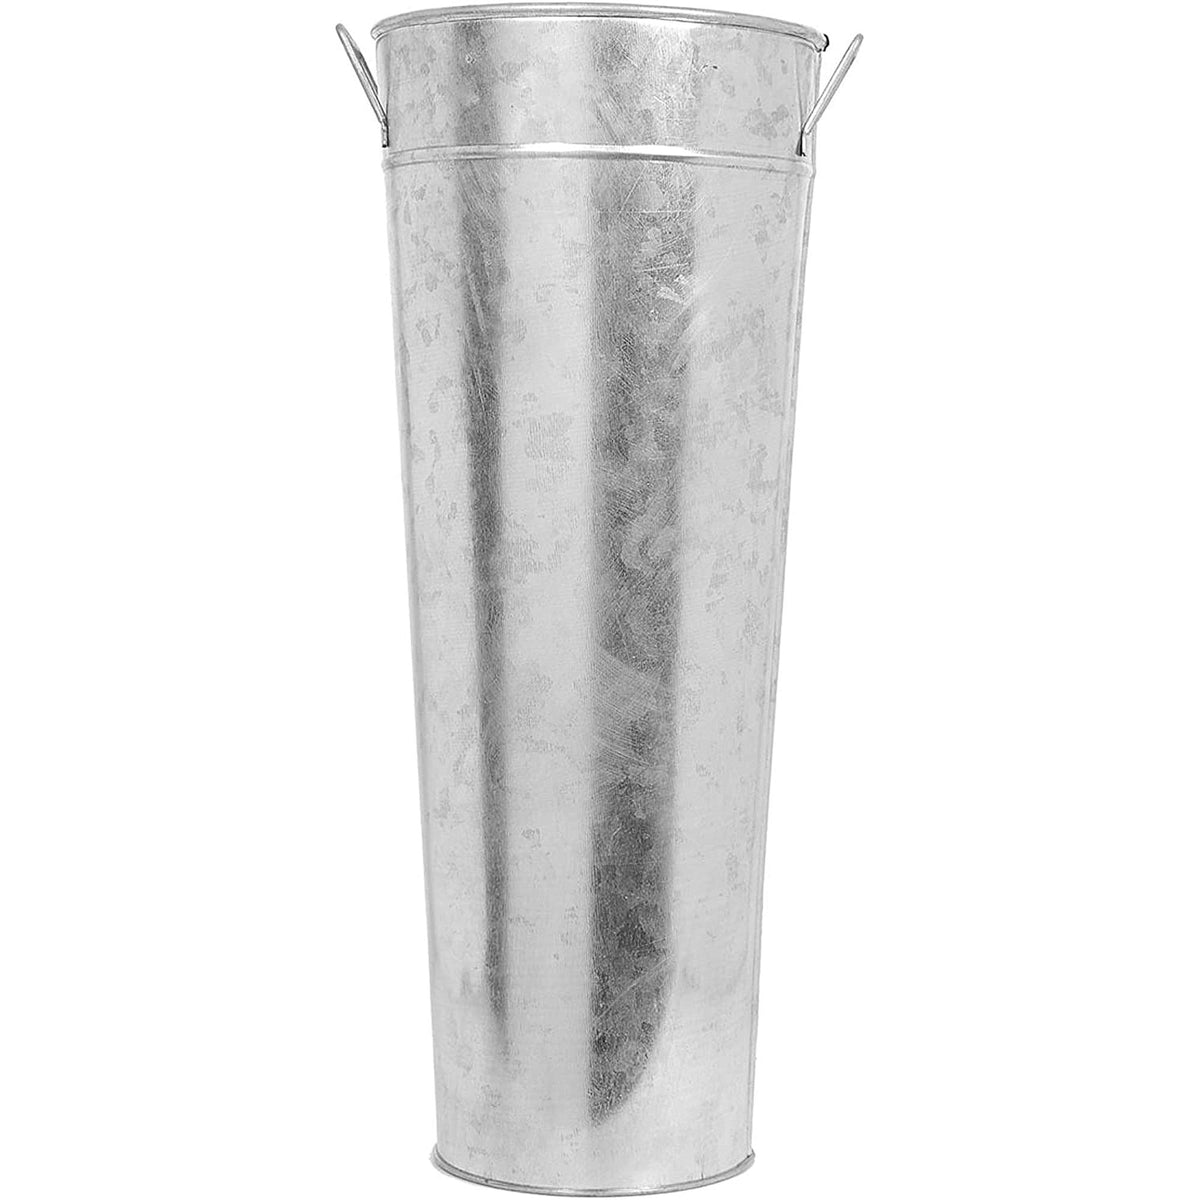 HOSLEY® Iron Galvanized Vase, 15 inches High